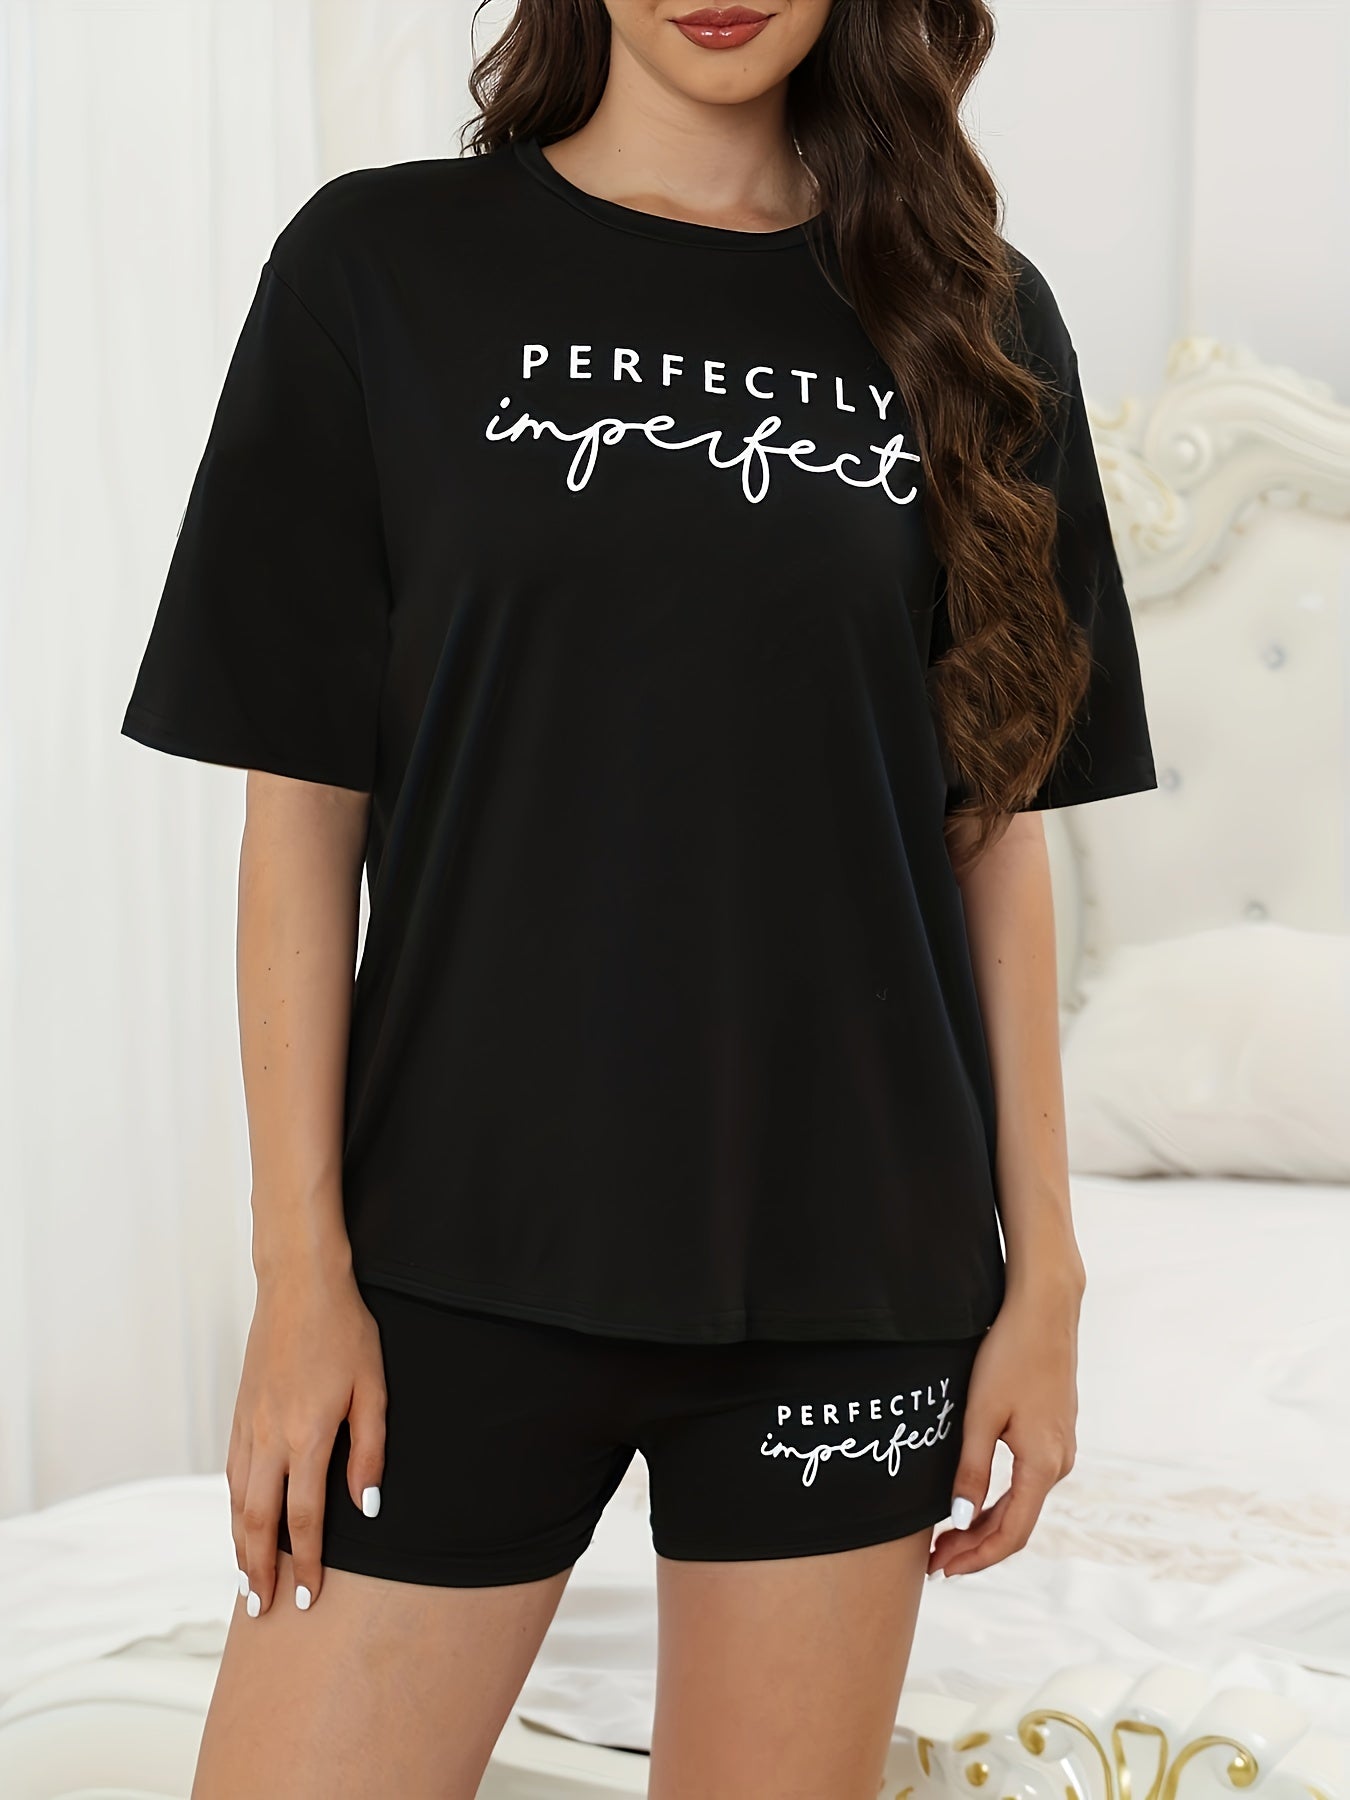 Perfectly Imperfect Women's Christian Pajamas claimedbygoddesigns